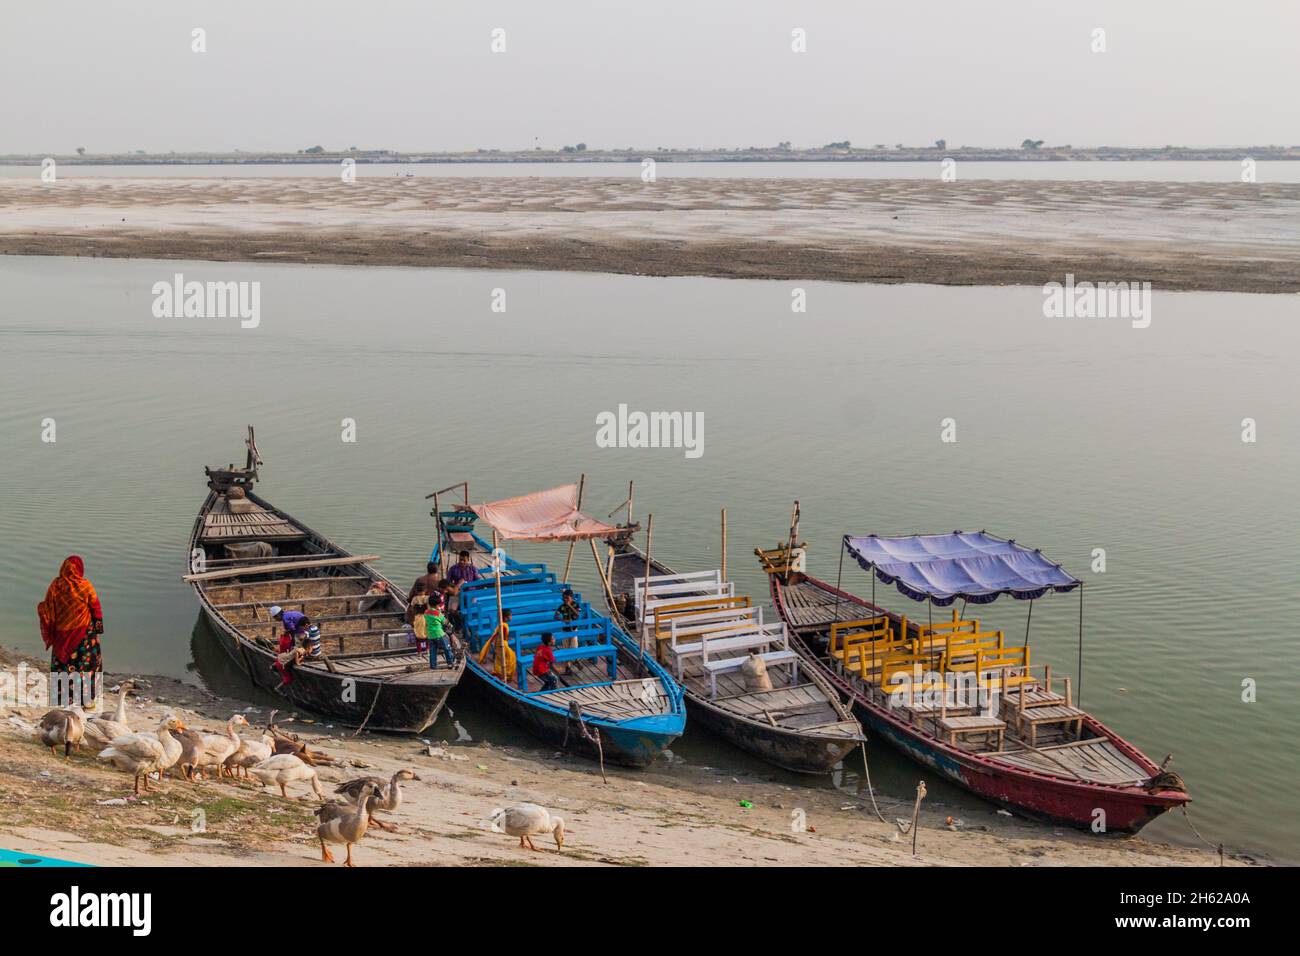 RAJSHAHI, BANGLADESH - 10 NOVEMBRE 2016: Barche di legno sul fiume padma in Rajshahi, Bangladesh Foto Stock